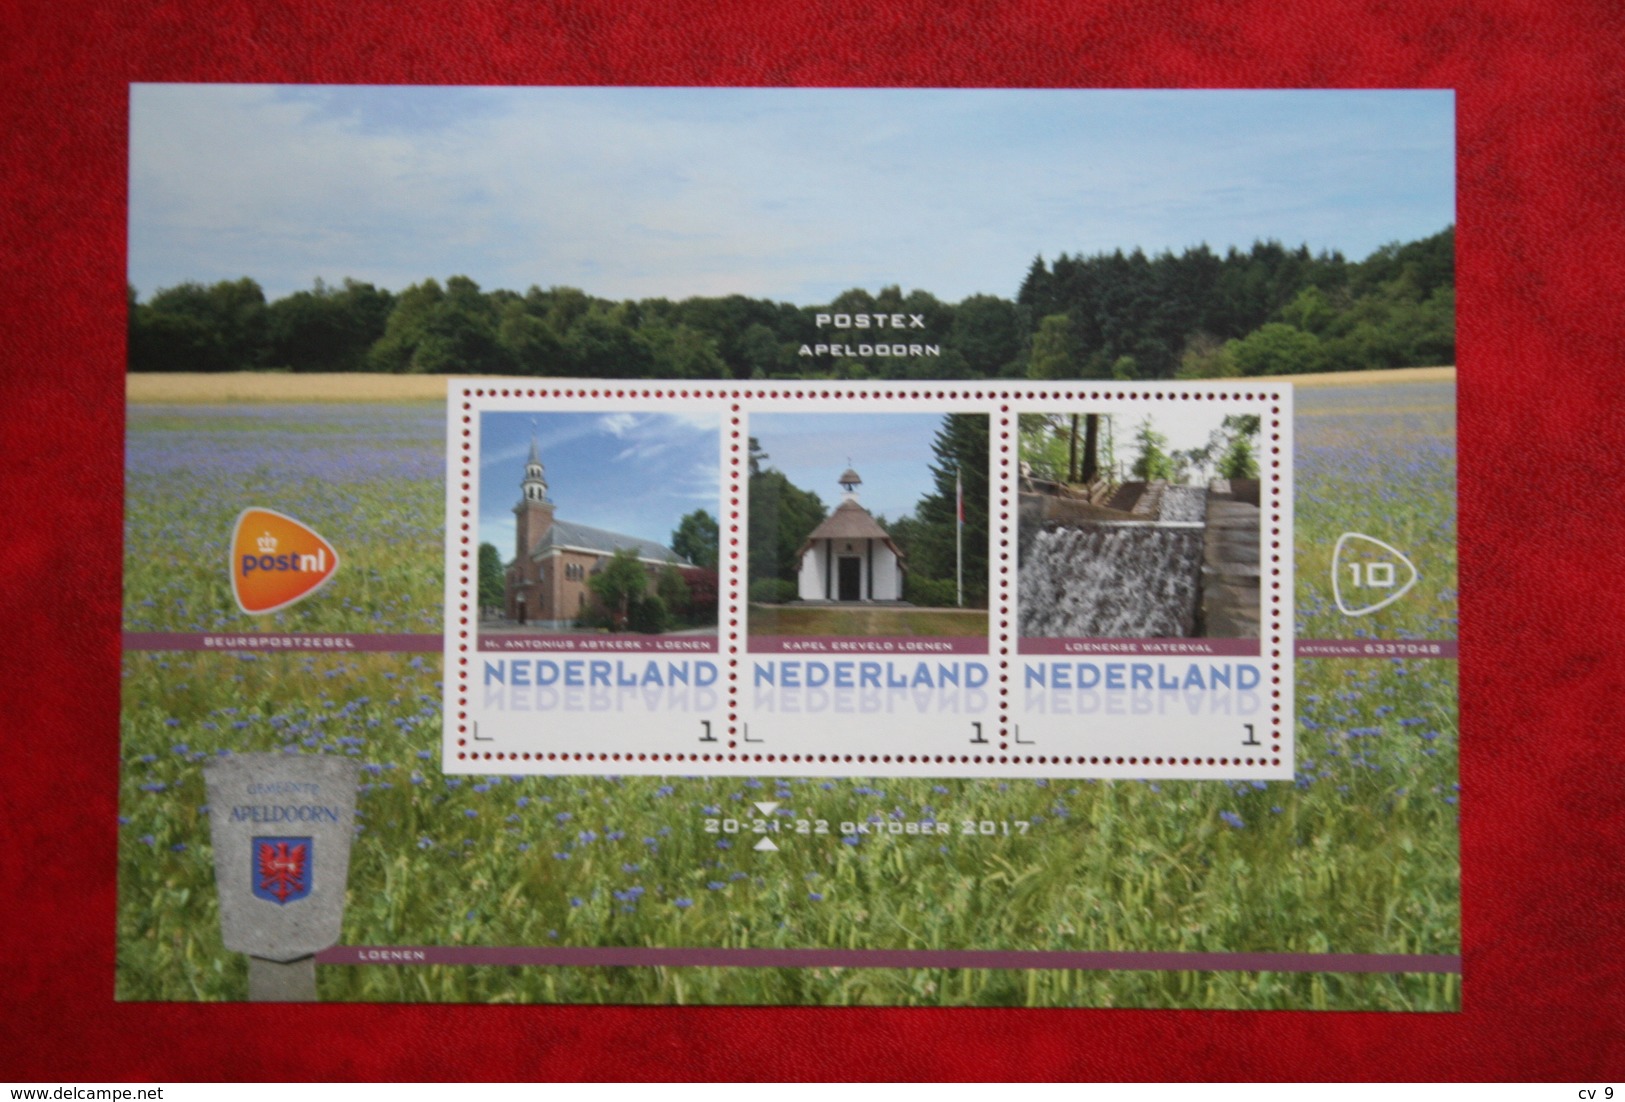 Persoonlijke Postzegels POSTEX Apeldoorn 2017 Nr 10 POSTFRIS / MNH / ** NEDERLAND NIEDERLANDE NETHERLANDS - Timbres Personnalisés